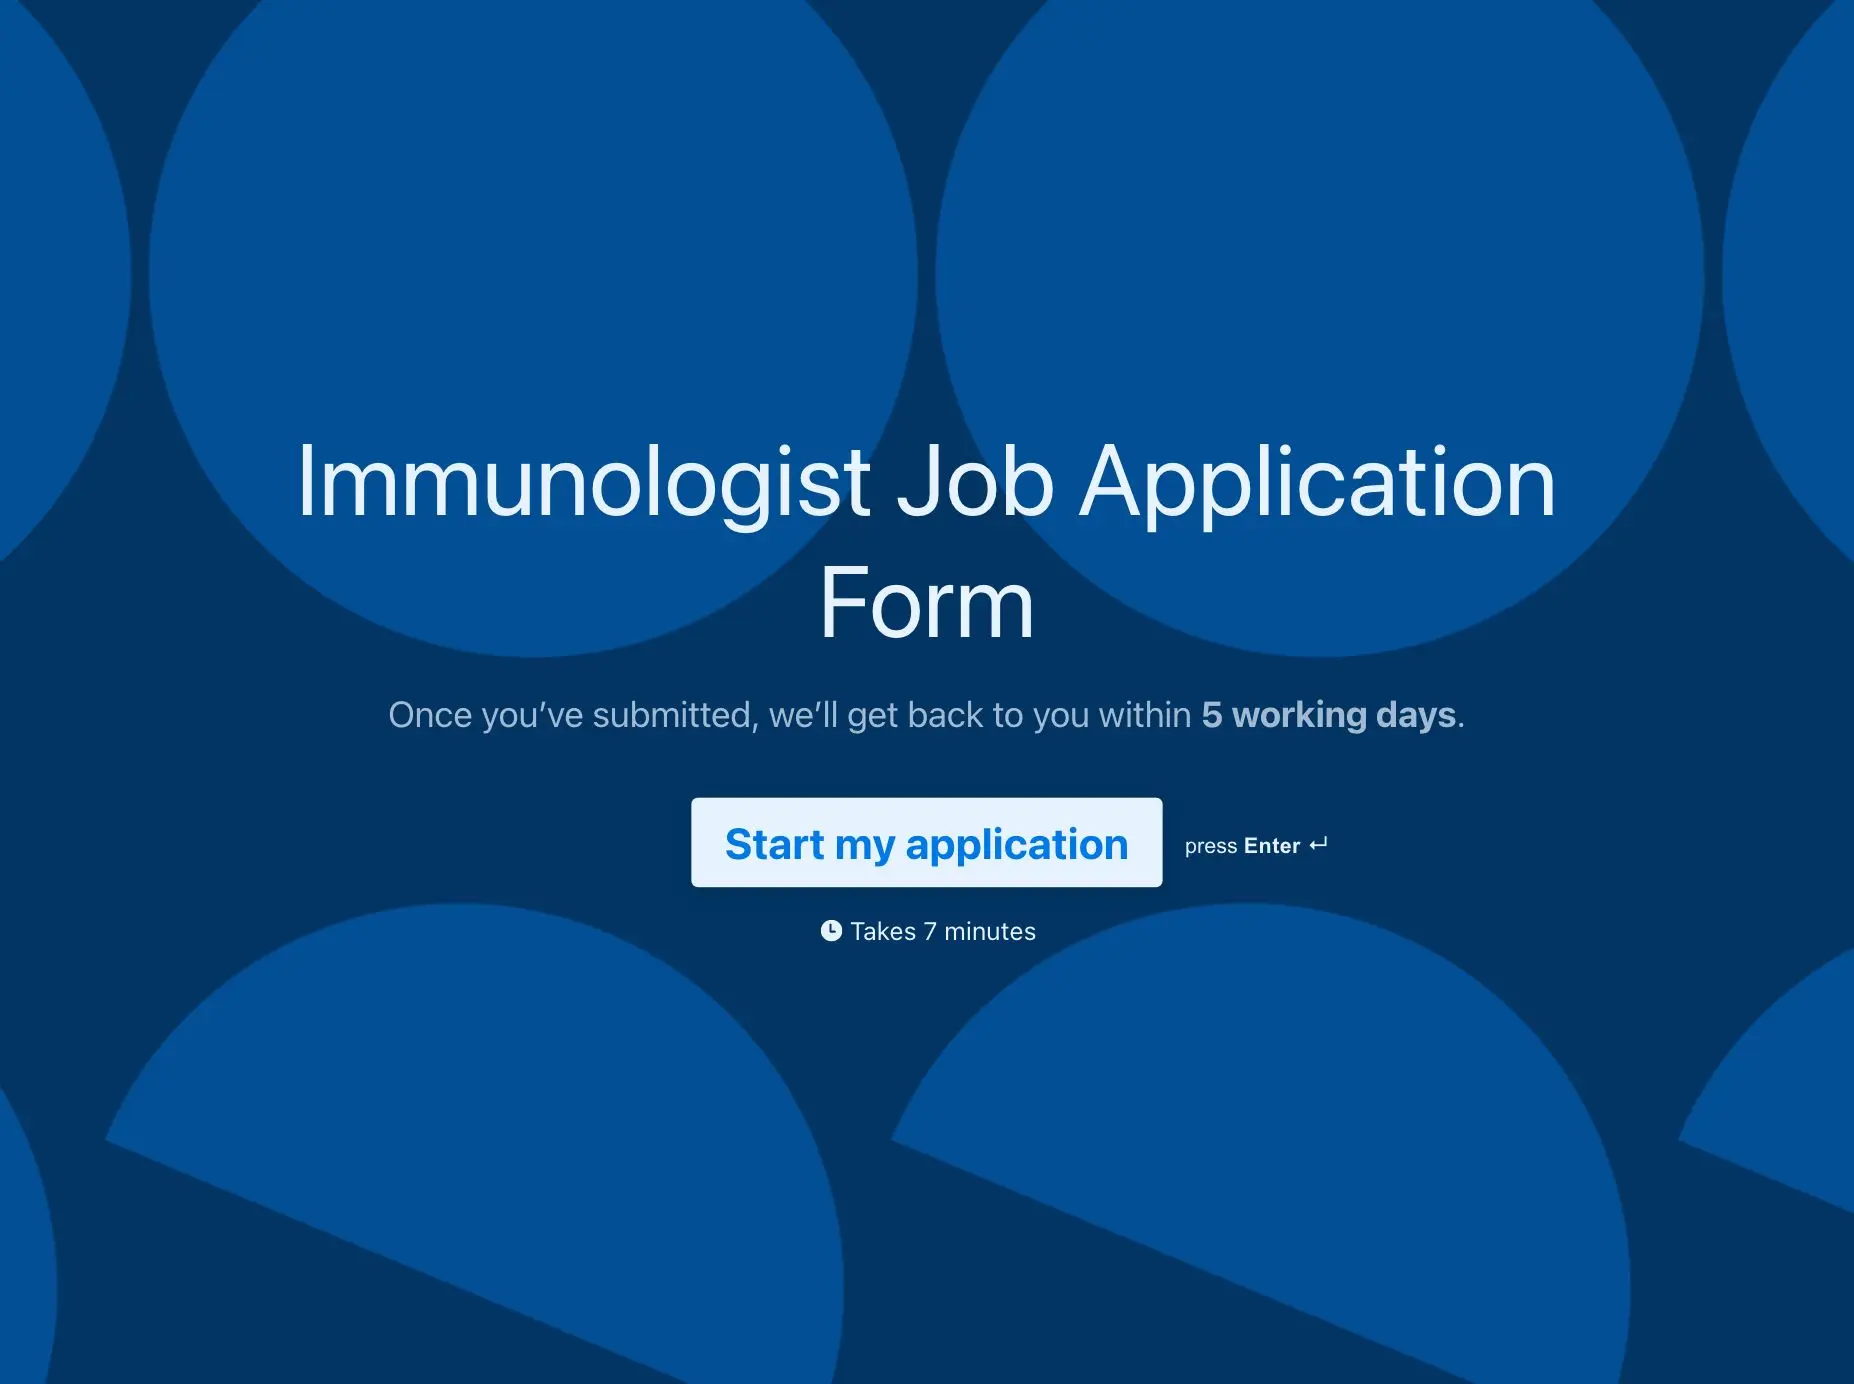 Immunologist Job Application Form Template Hero